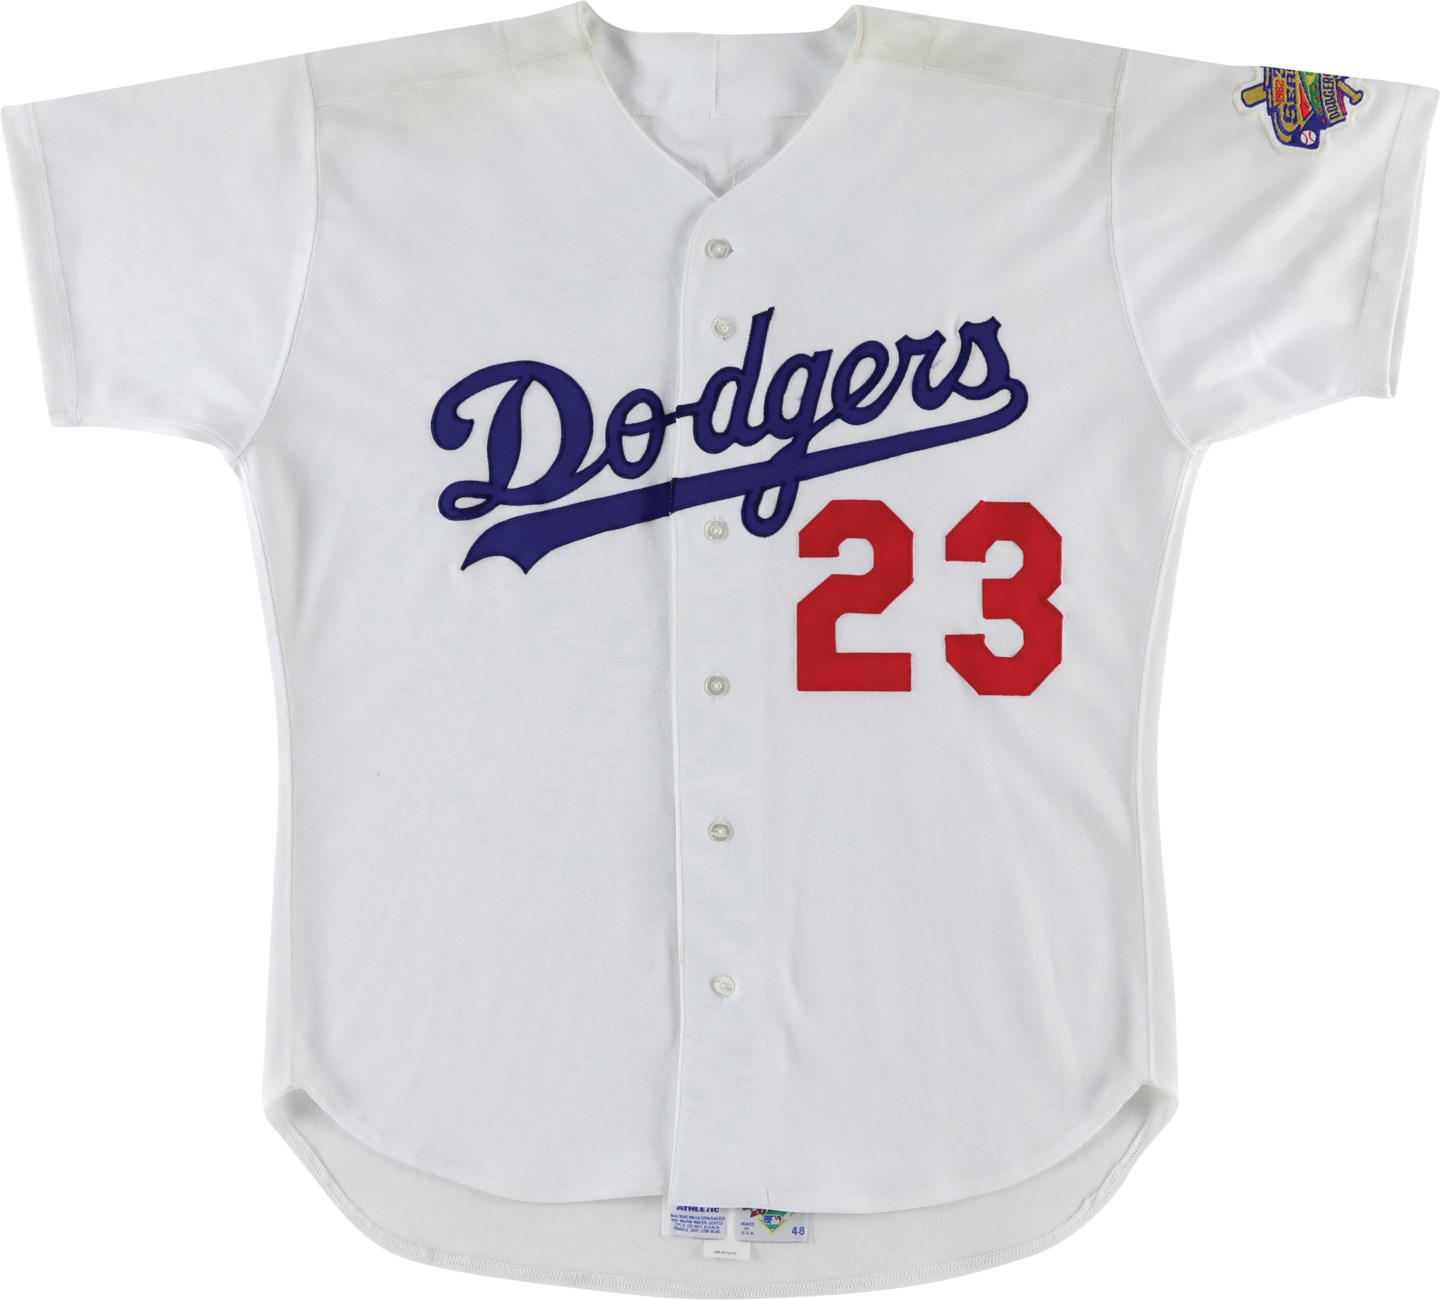 1996 Eric Karros Los Angeles Dodgers Game Worn Jersey